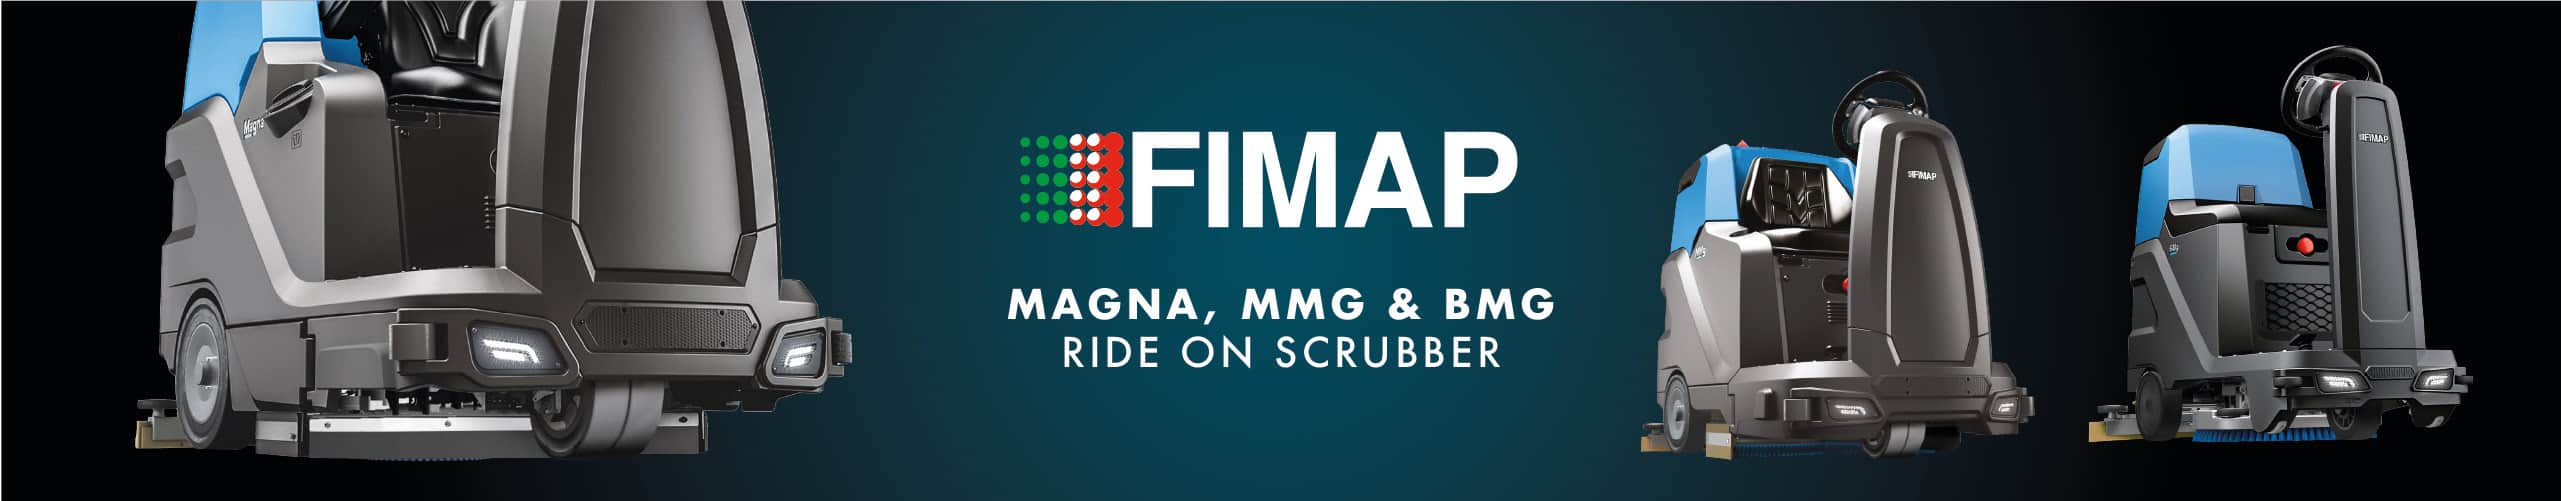 Large FIMAP Banner